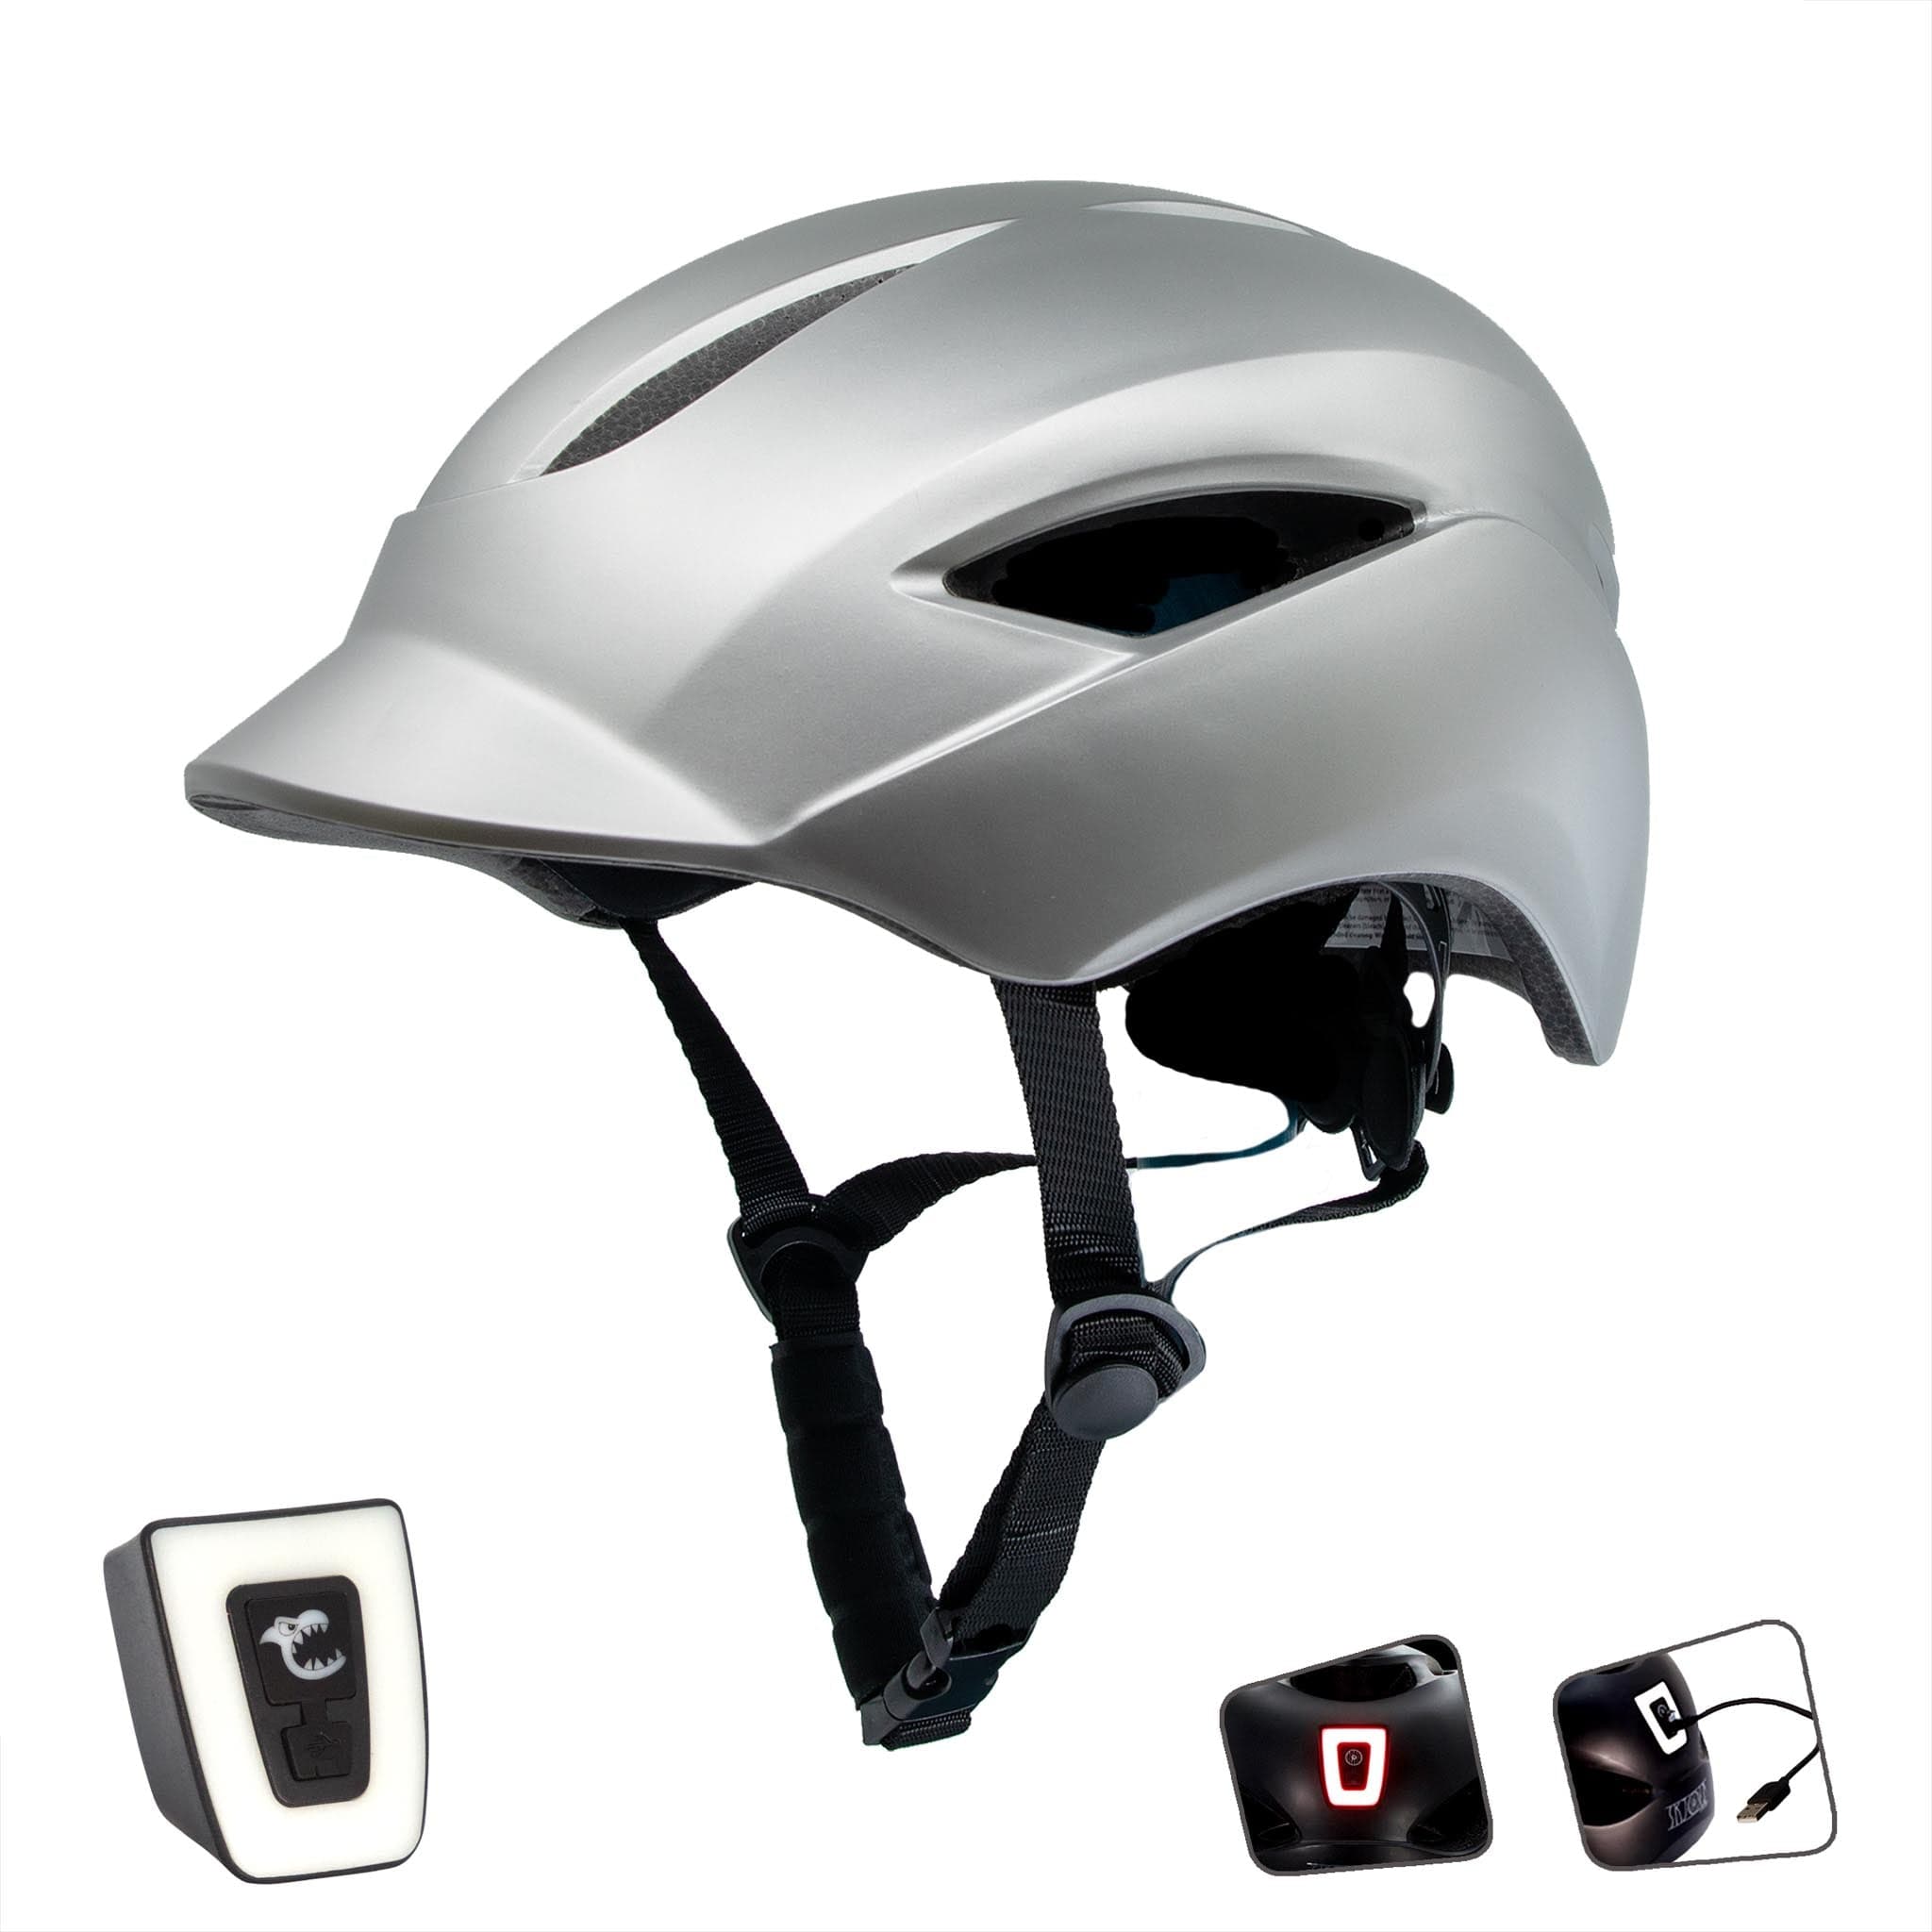 Matt silver bike helmet